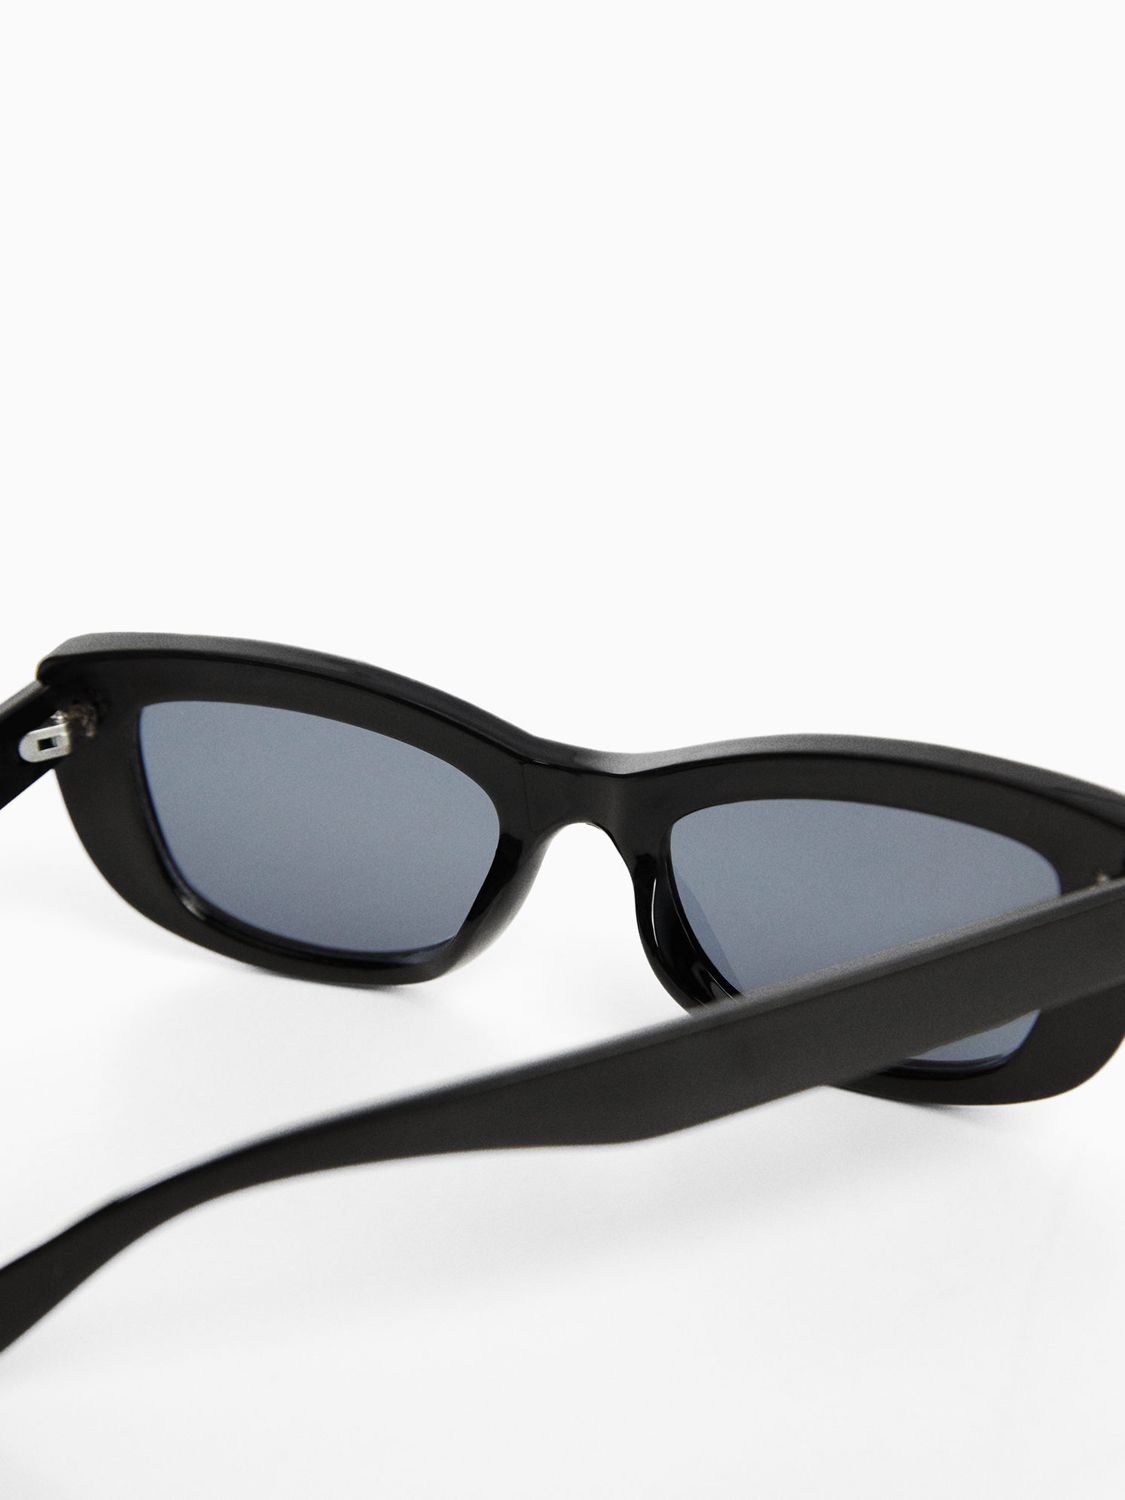 Mango Women's Cathy Retro Style Sunglasses, Black, One Size